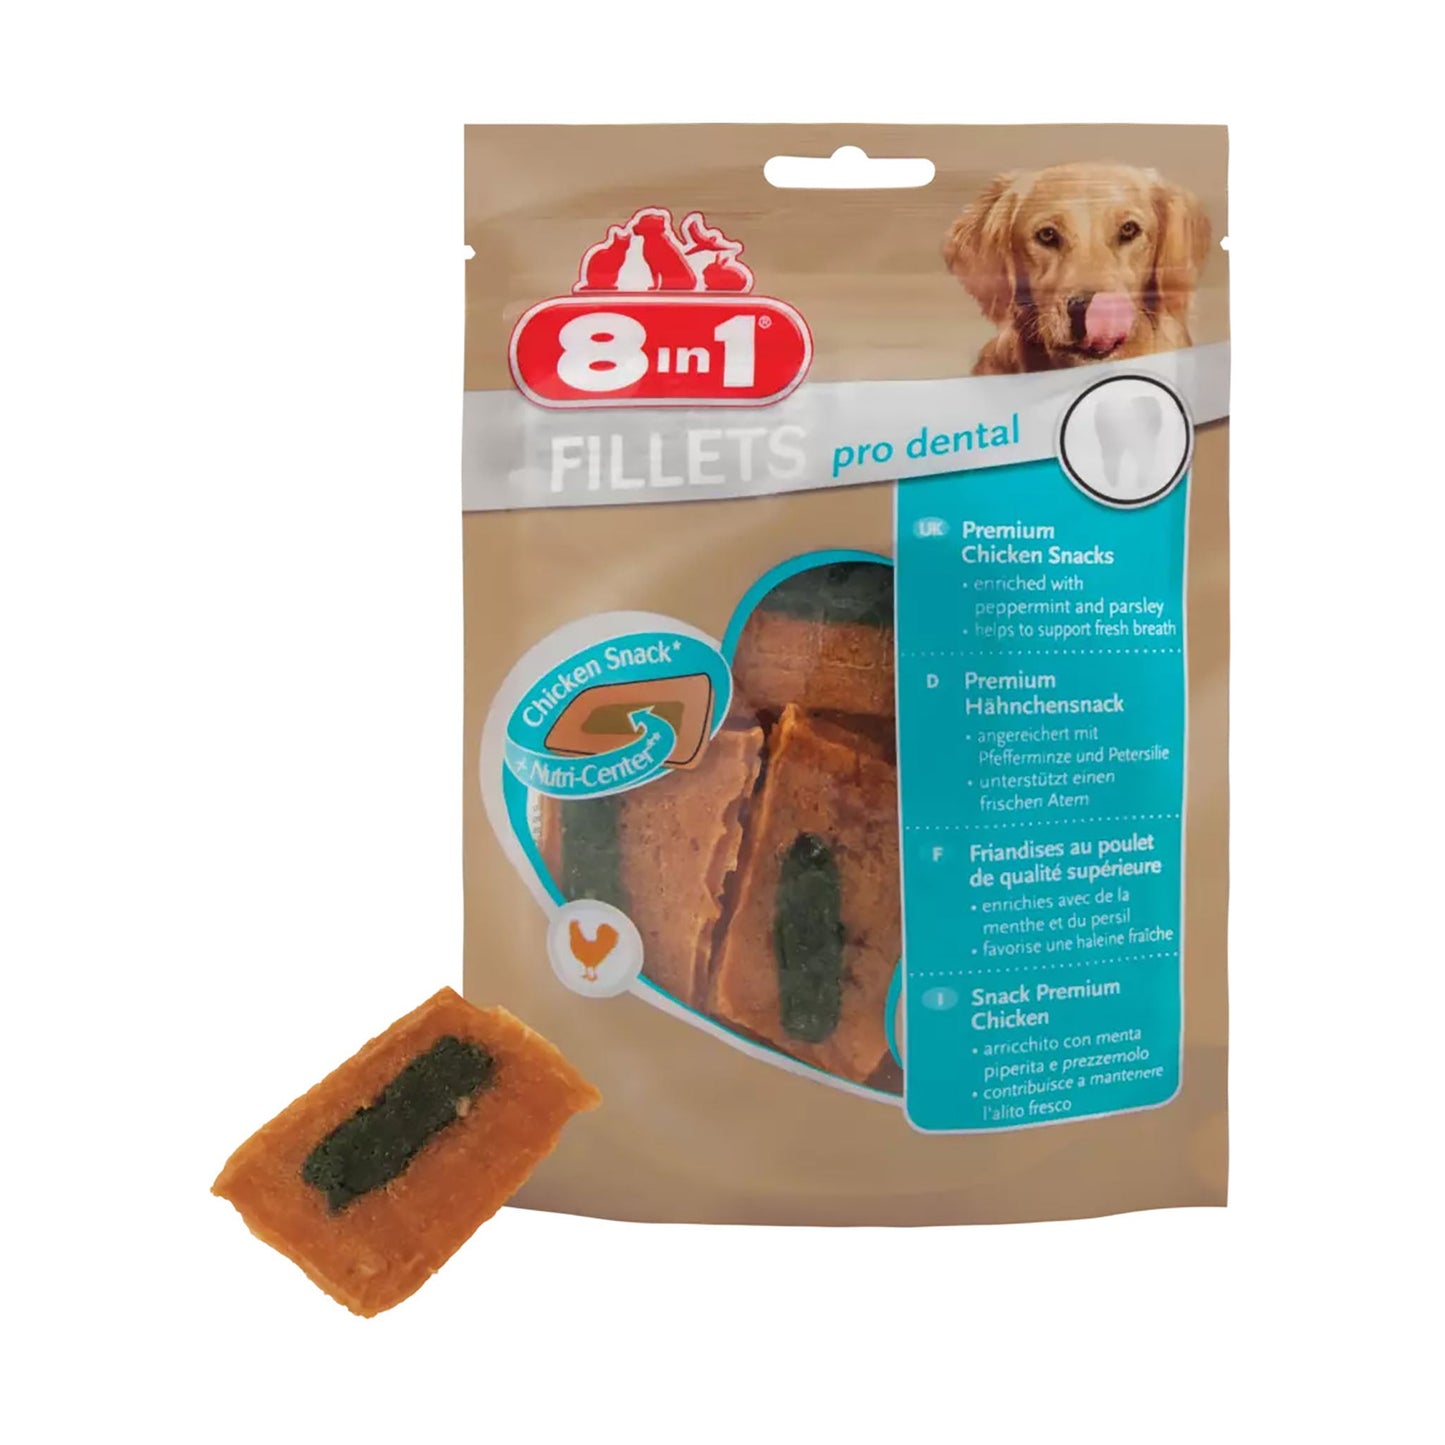 8in1 Fillets Pro Dental - Pet Merit Store8in1 Fillets Pro Dental